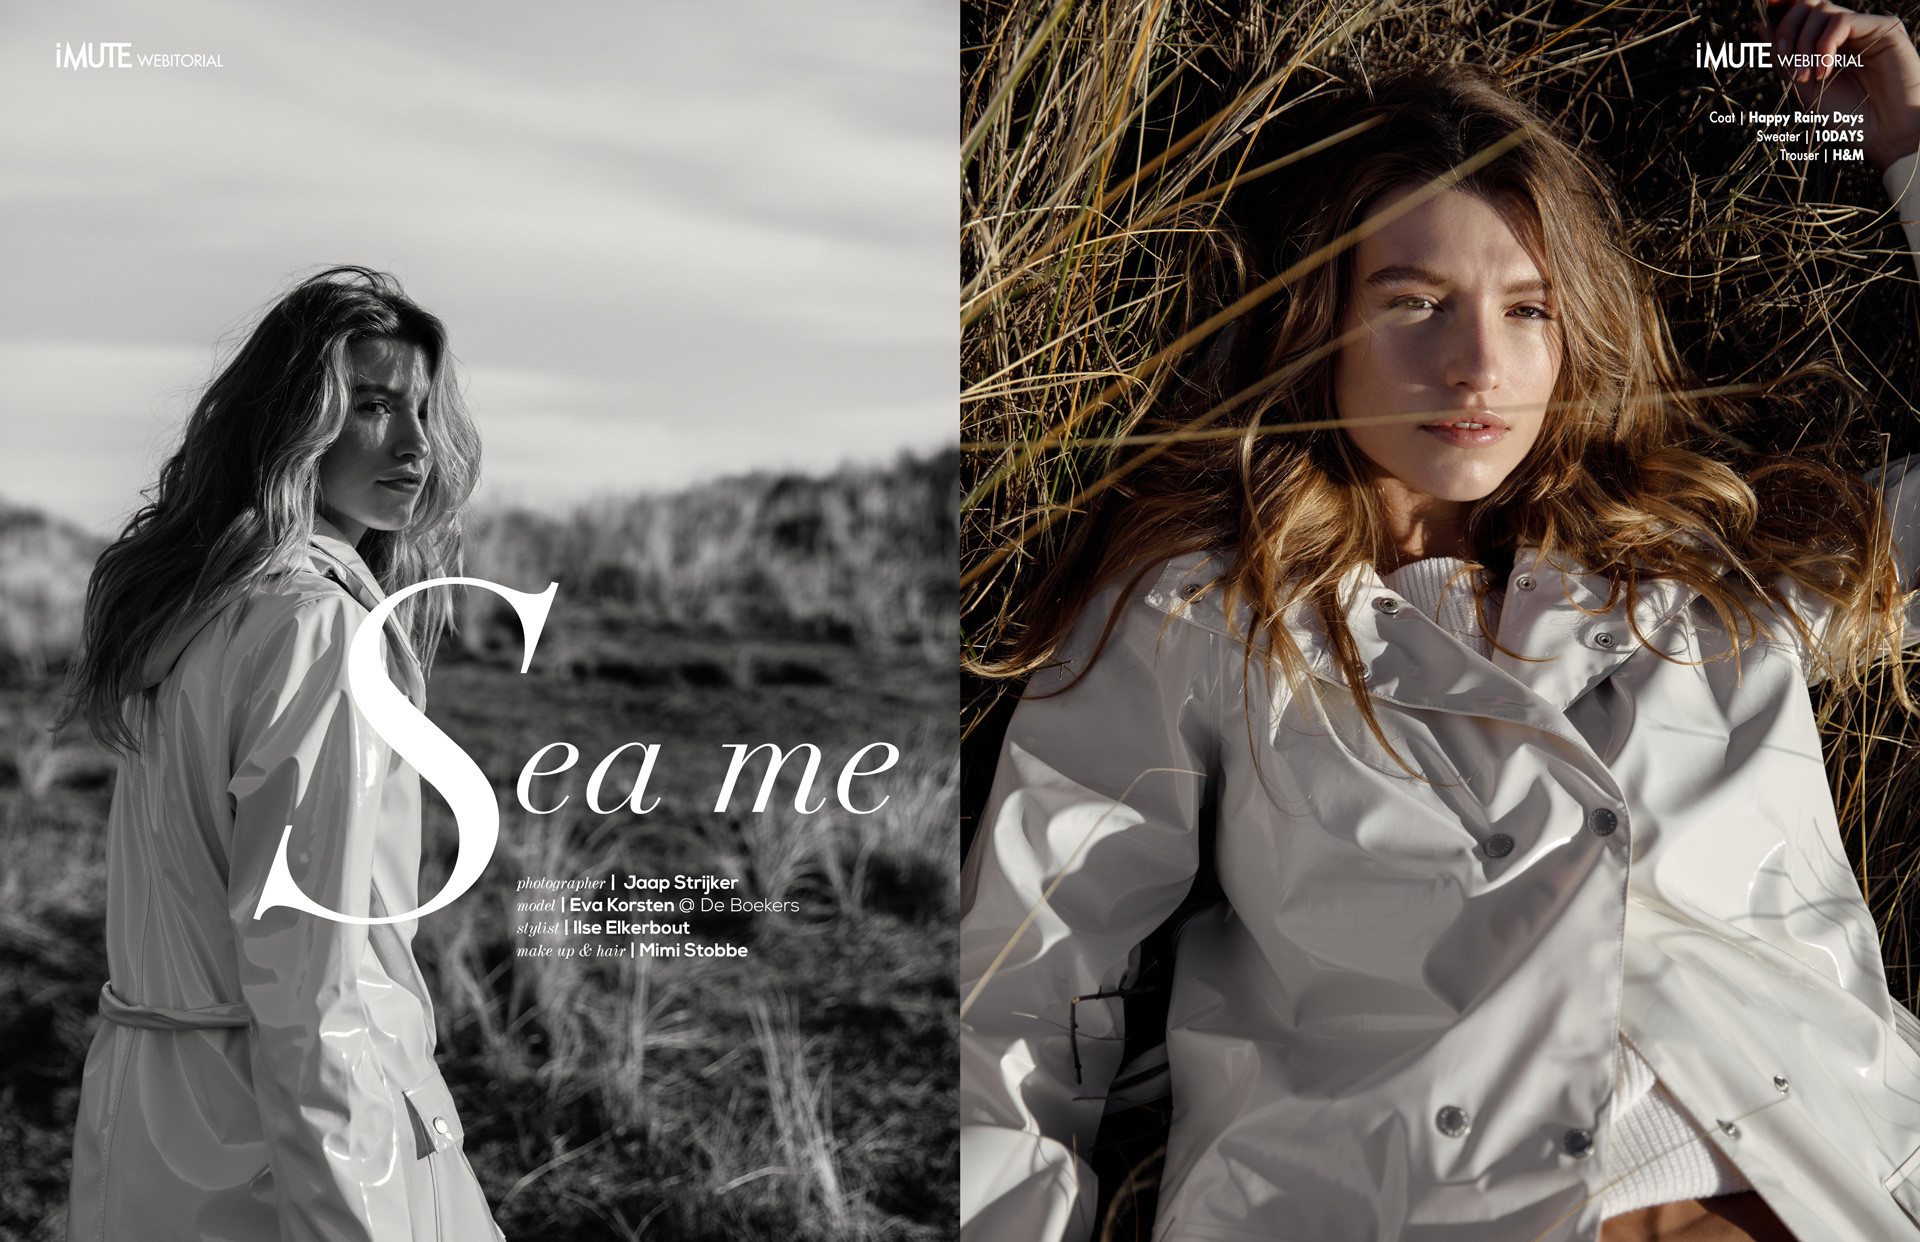 Sea me webitorial for iMute Magazine Photographer | Jaap Strijker Model | Eva Korsten @ De Boekers Stylist | Ilse Elkerbout Makeup & Hair | Mimi Stobbe